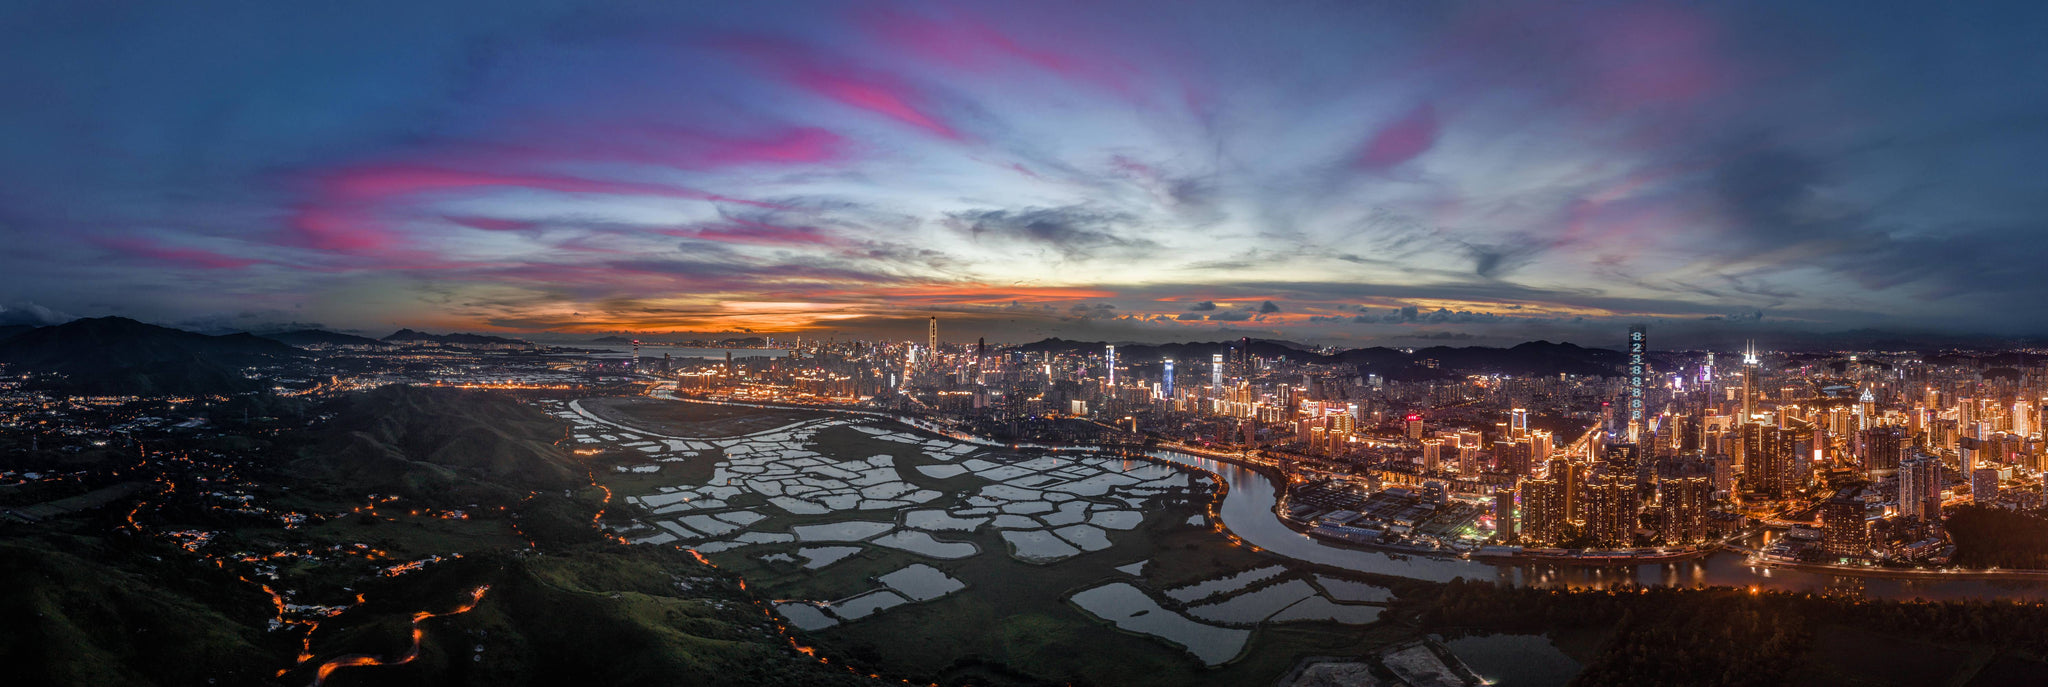 Sunset over Shenzhen by Blair Sugarman - Print